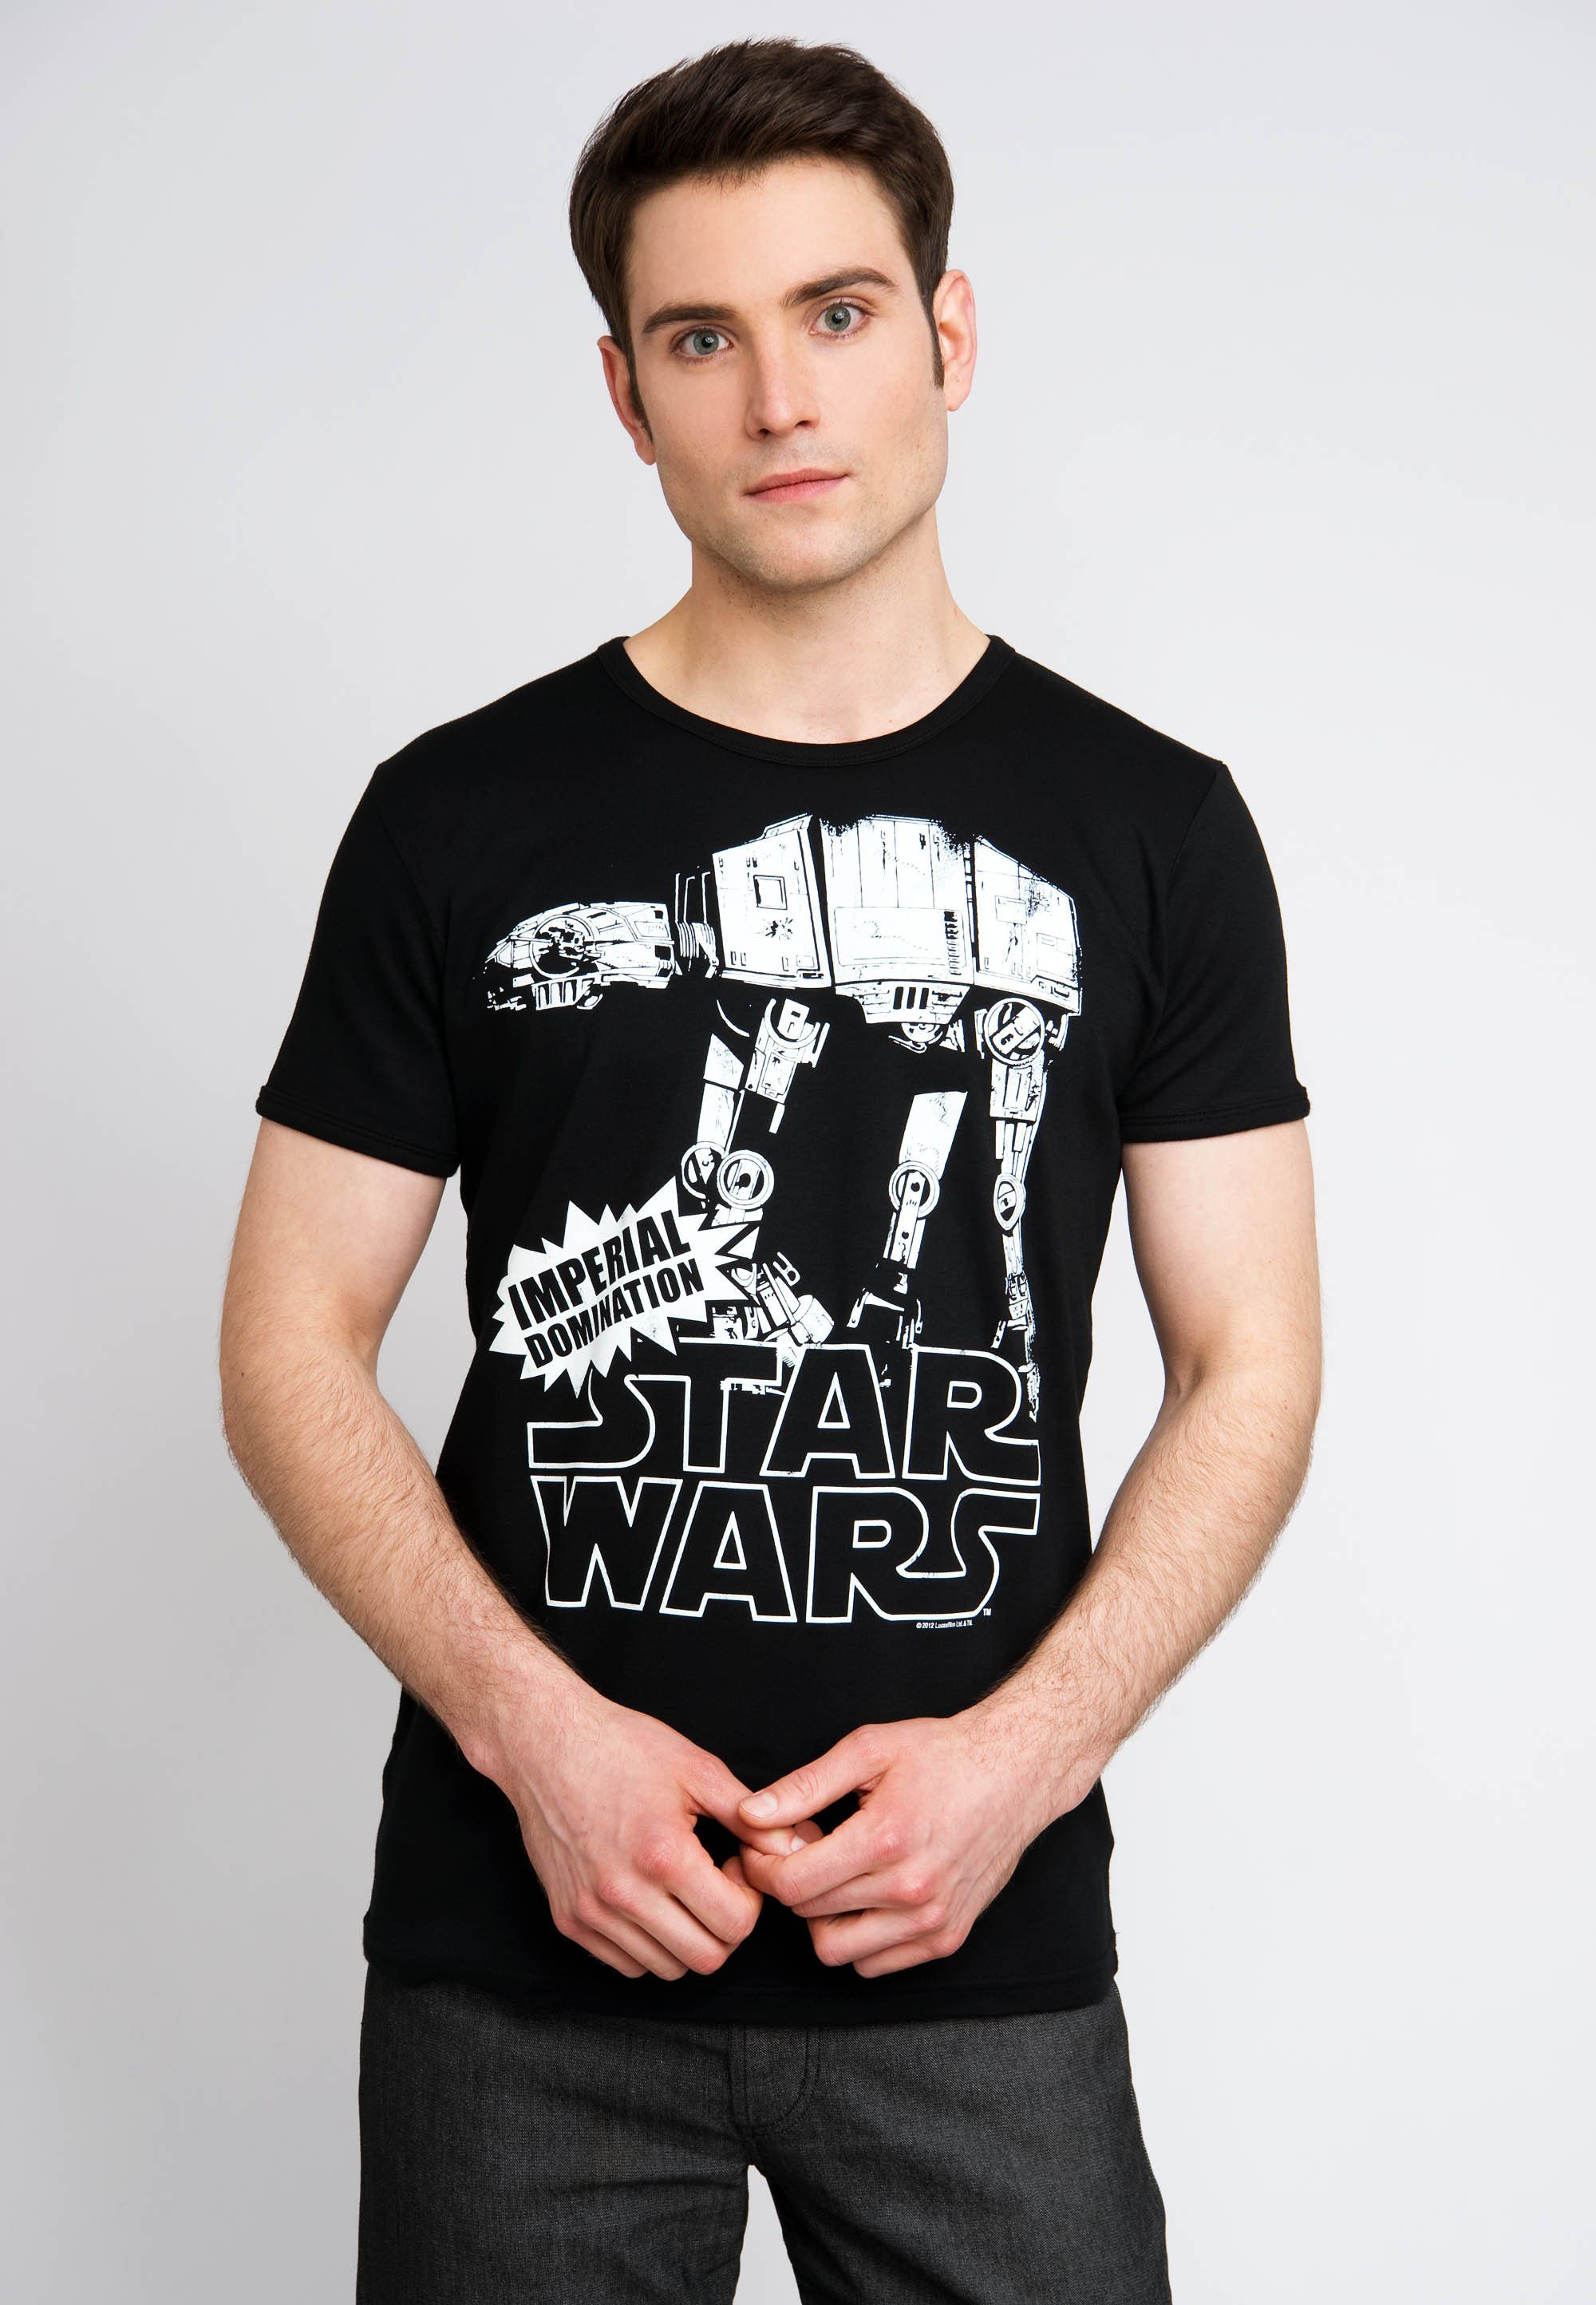 LOGOSHIRT T-Shirt AT-AT mit großem Star Wars-Aufdruck | T-Shirts